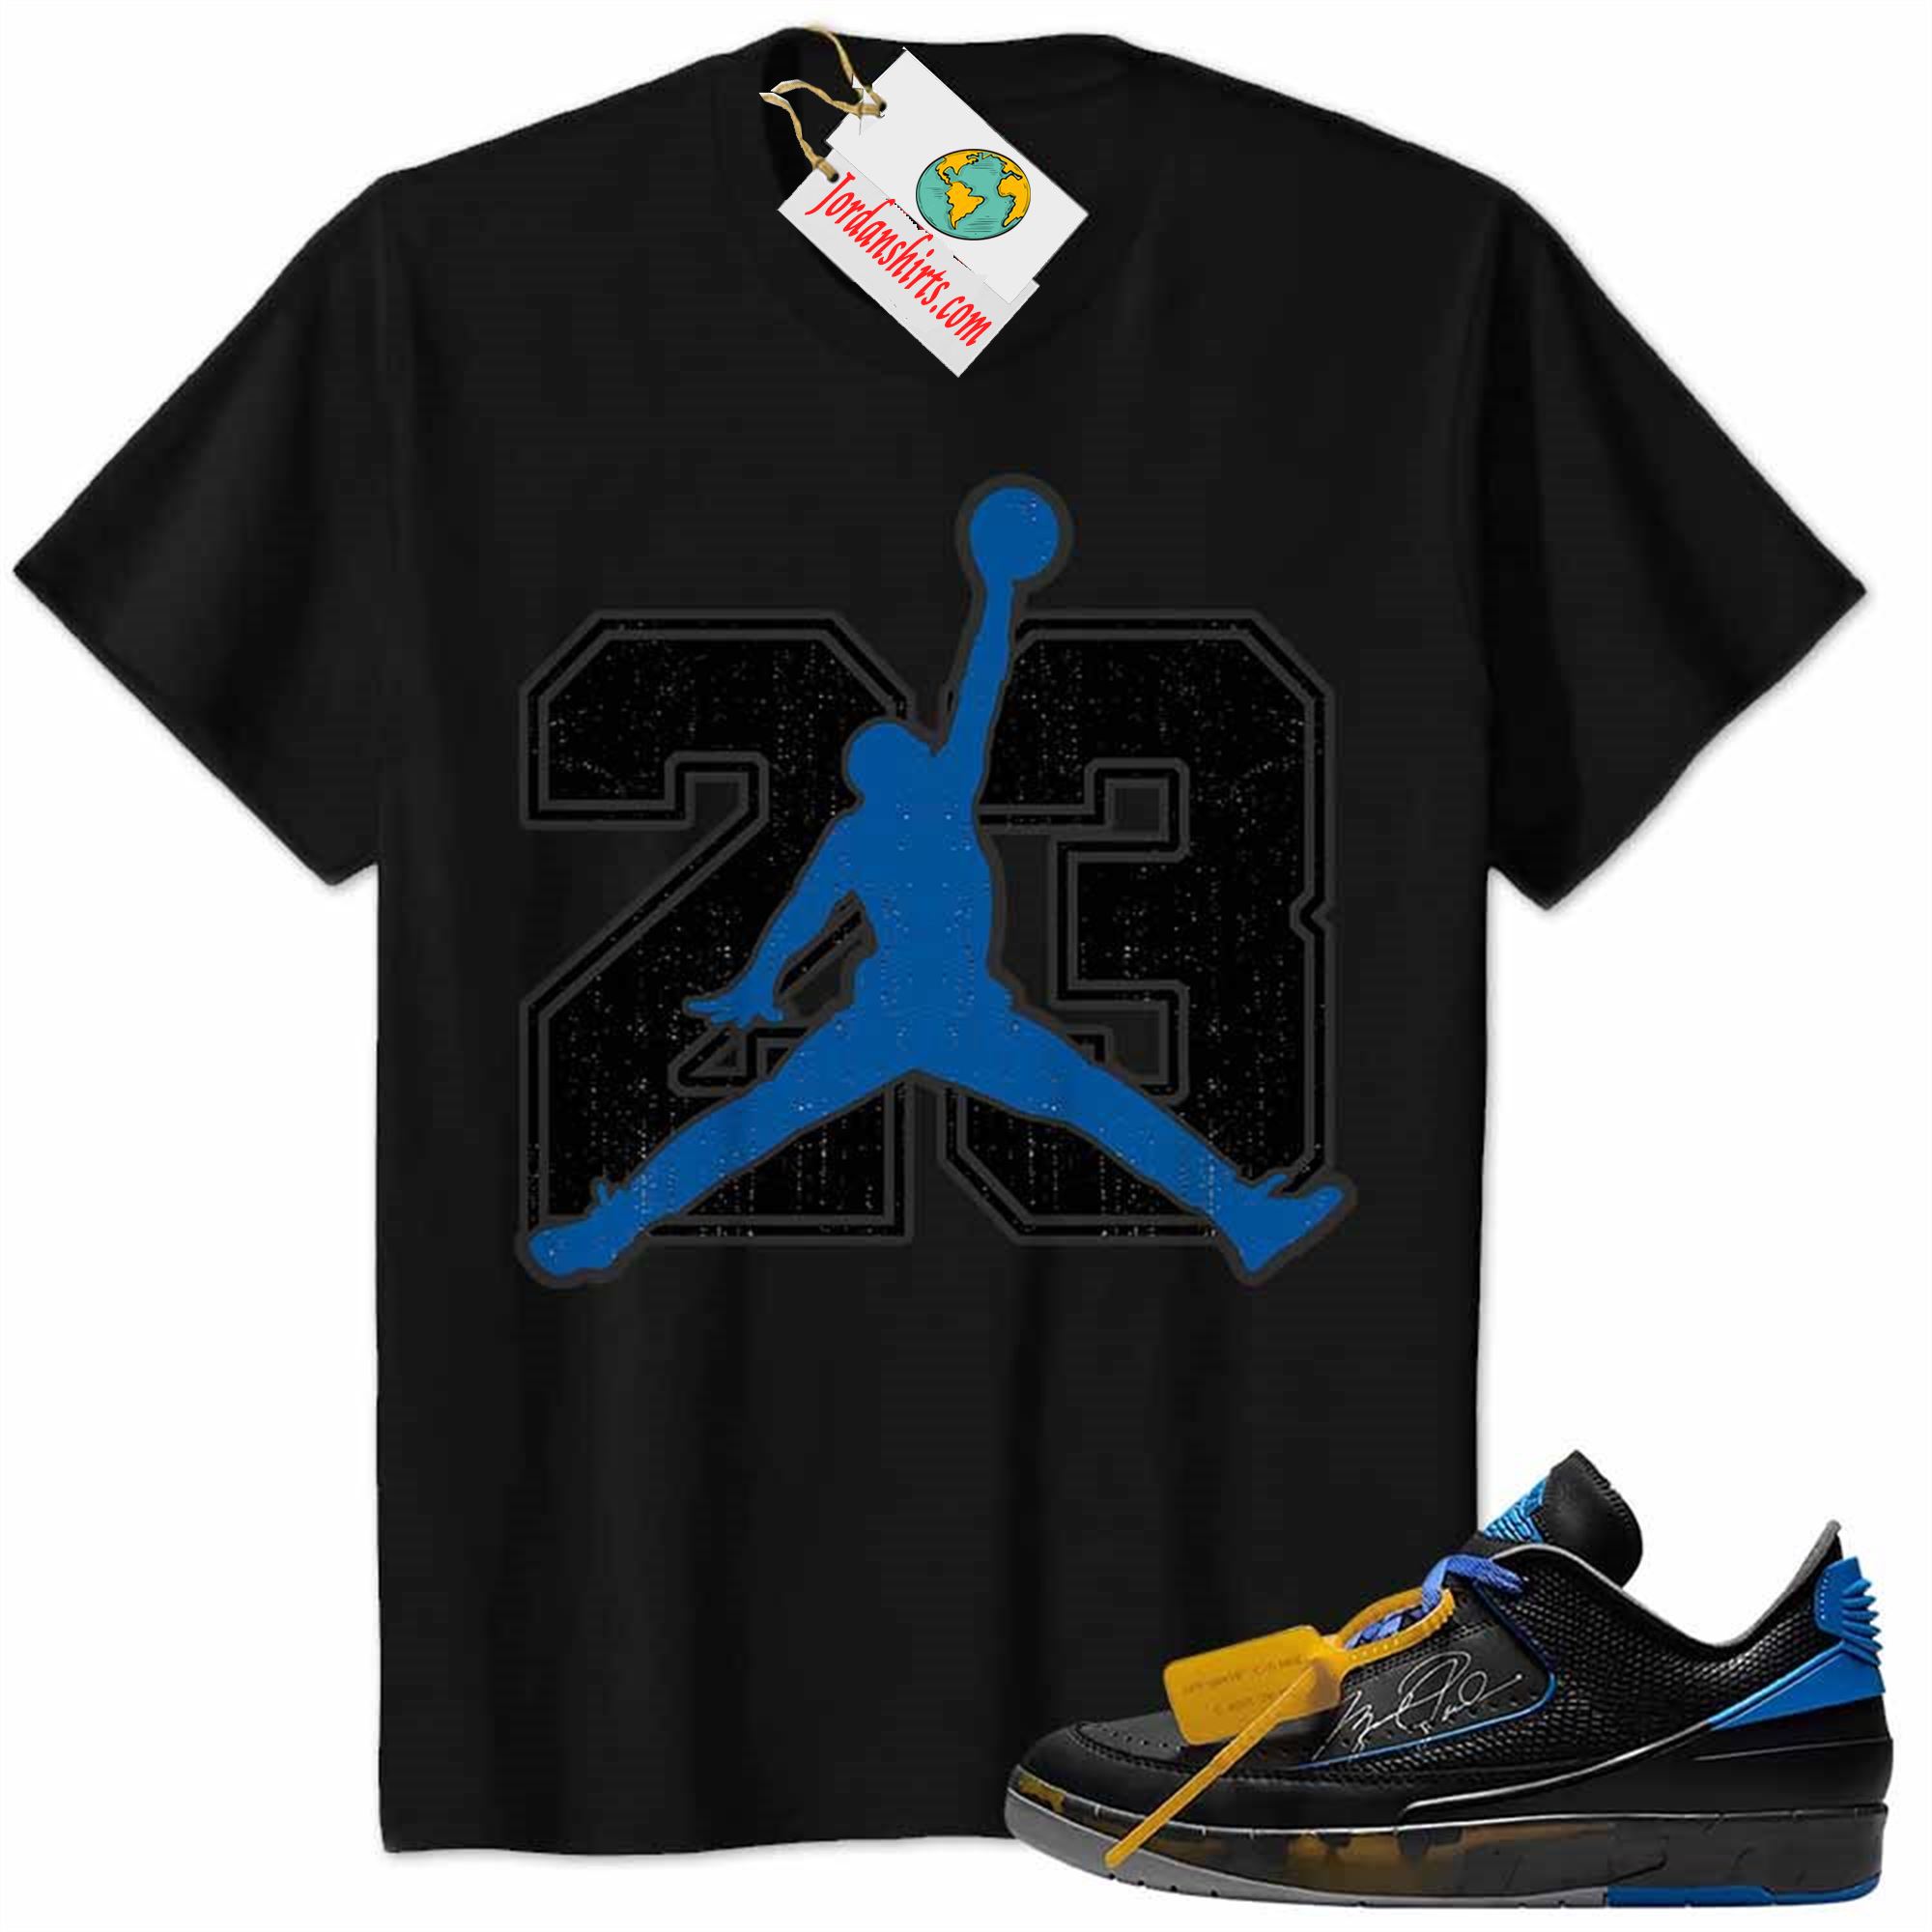 Jordan 2 Shirt, Jordan 2 Low X Off-white Black And Varsity Royal Shirt Jumpman No23 Black Size Up To 5xl